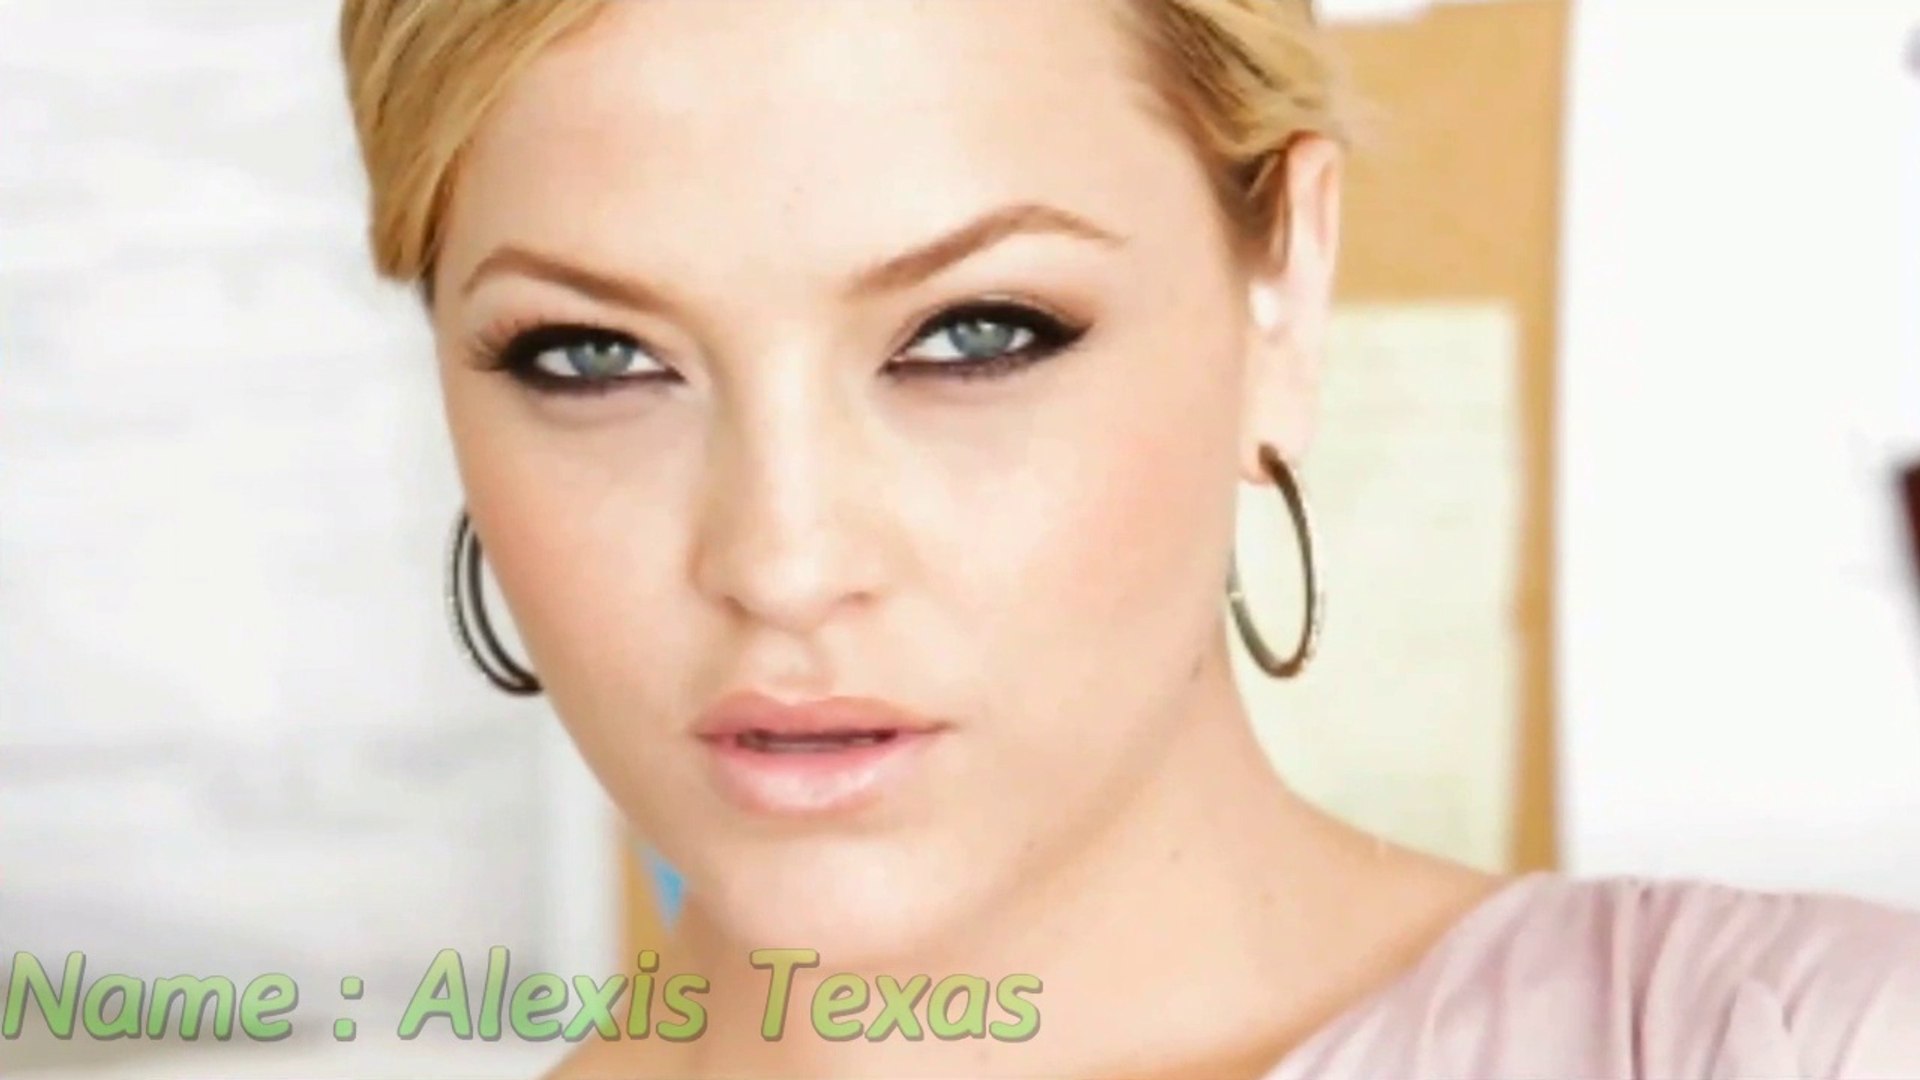 Alexis texas pictures